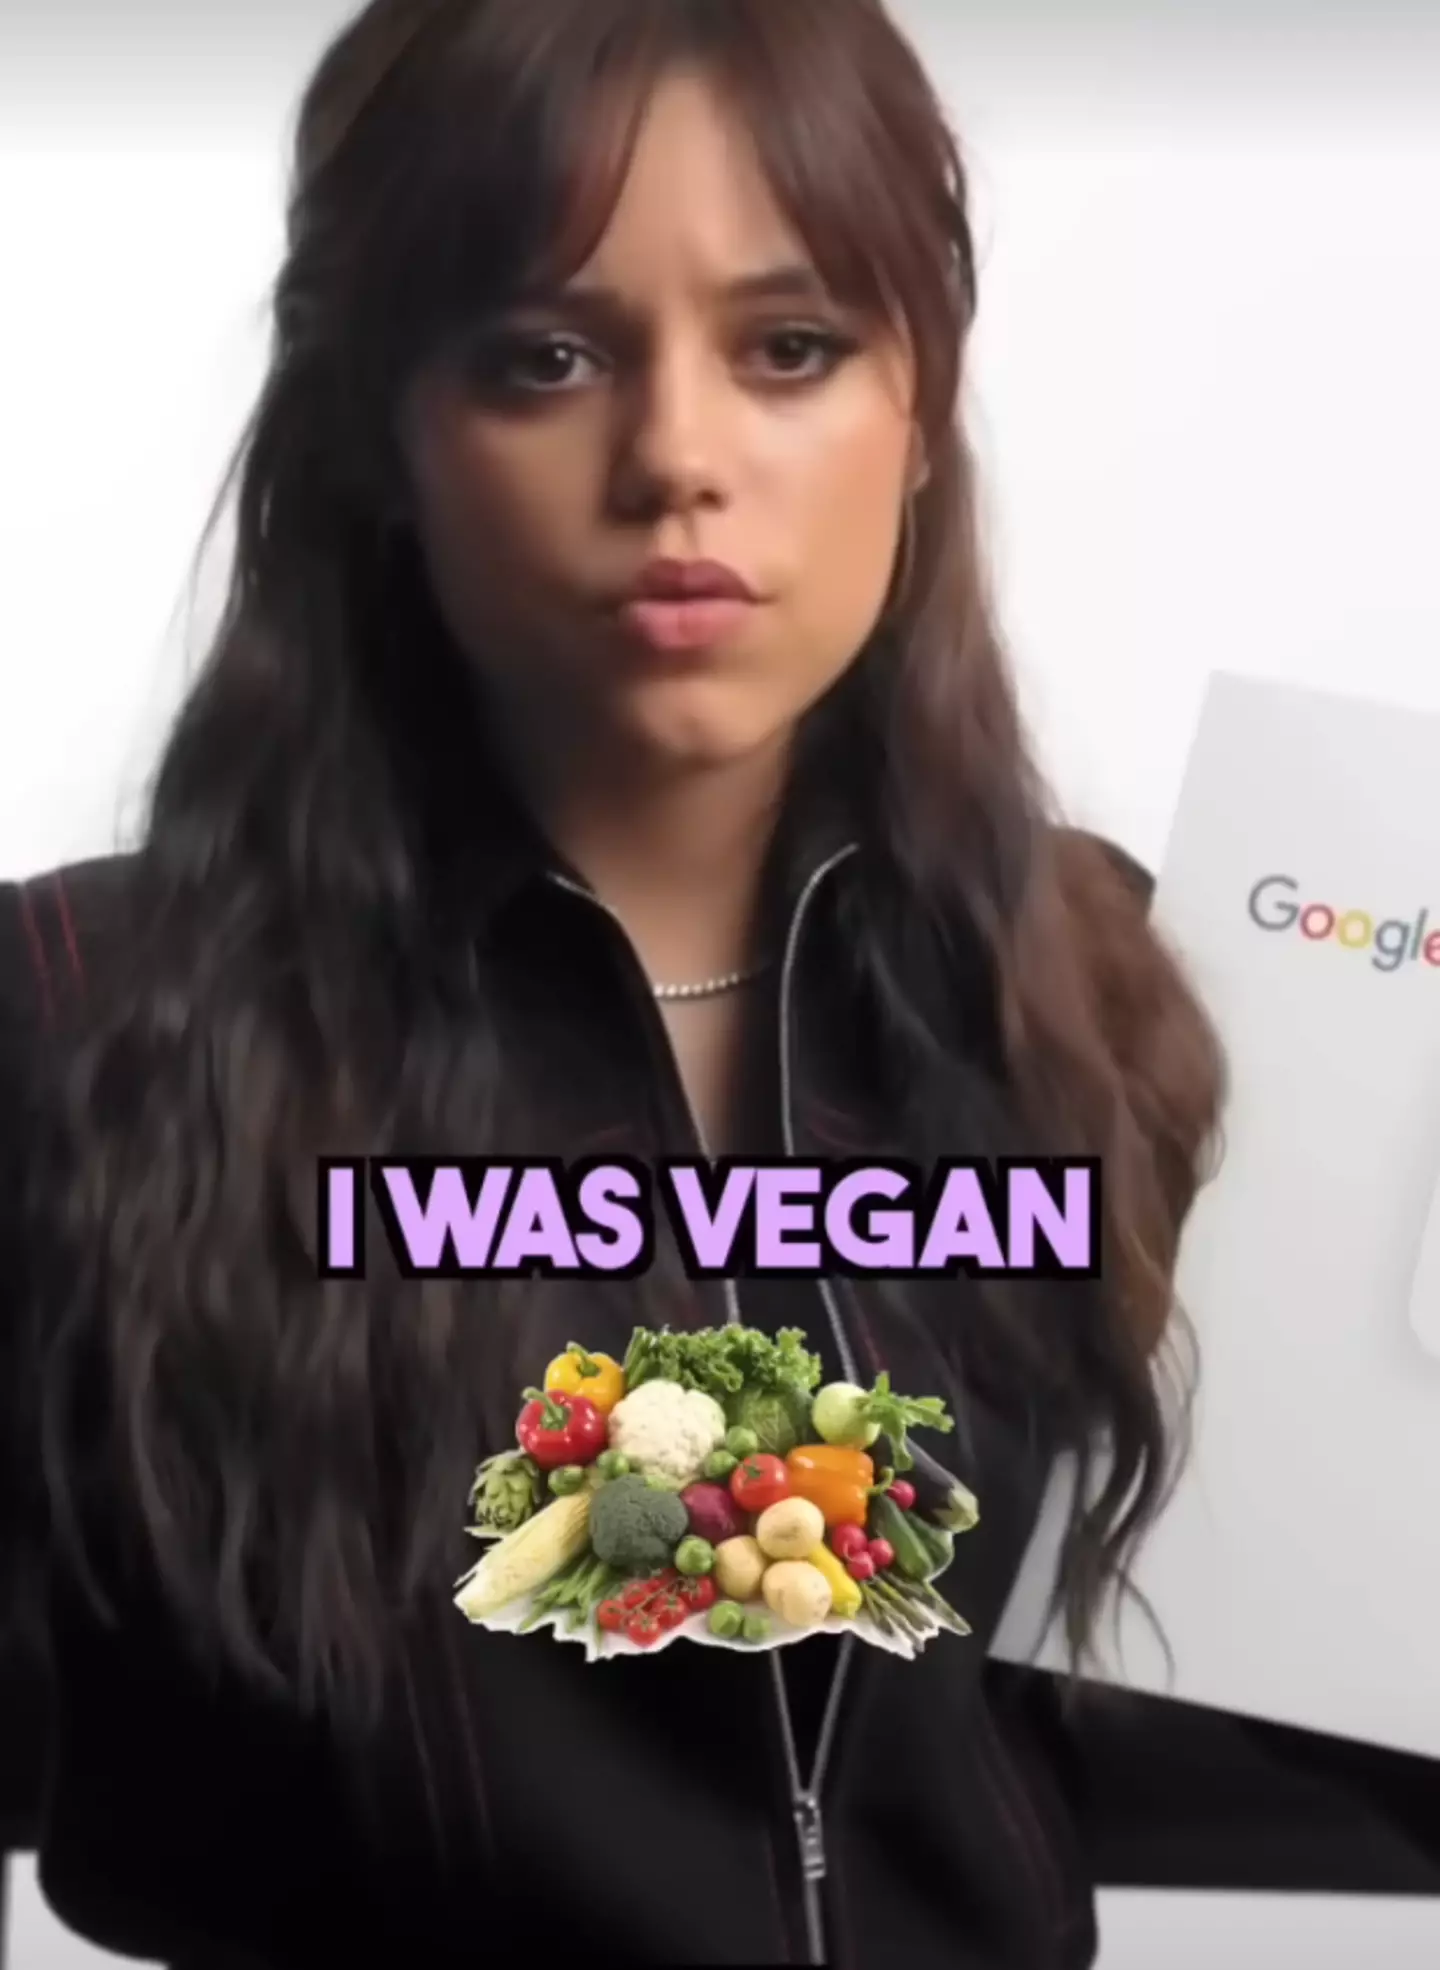 Jenna Ortega said she was vegan for a 'long time'.